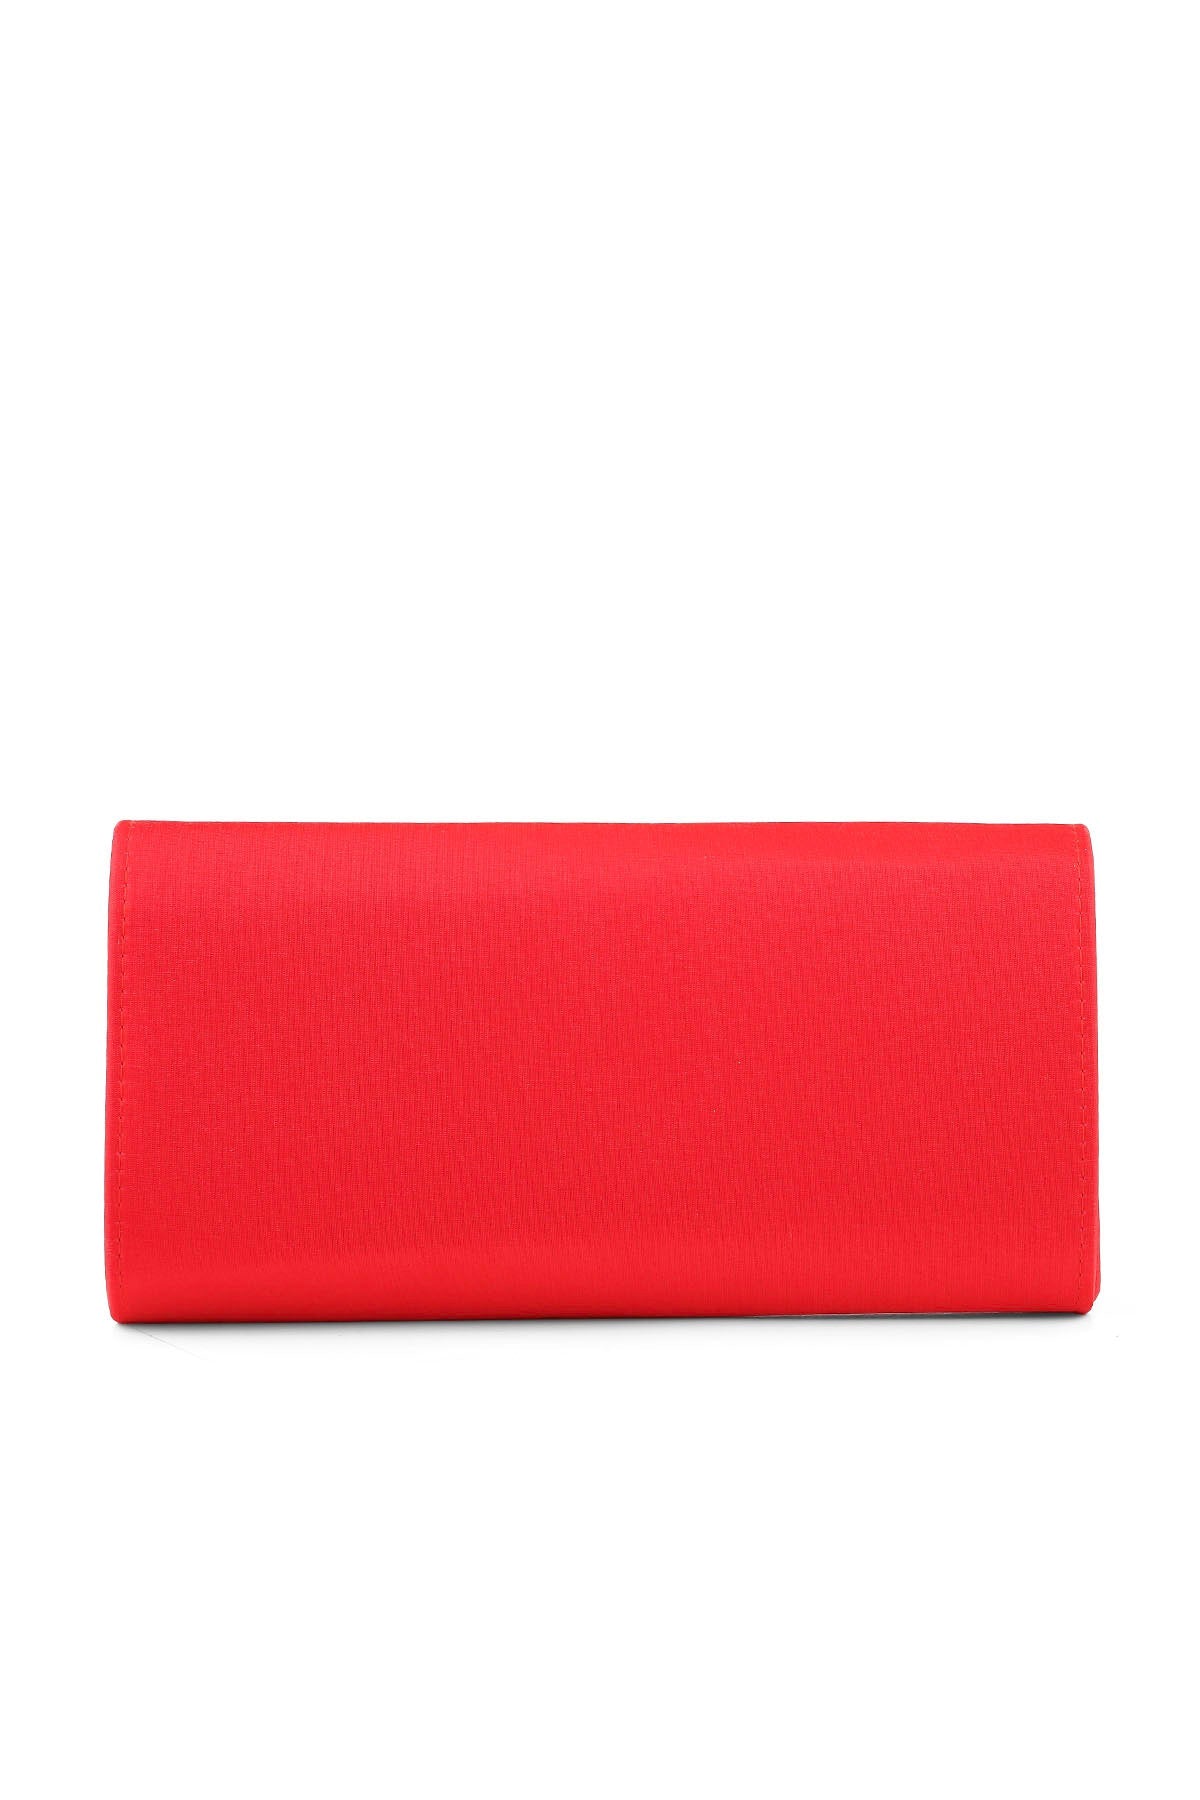 Flap Shoulder Bags B21577-Red